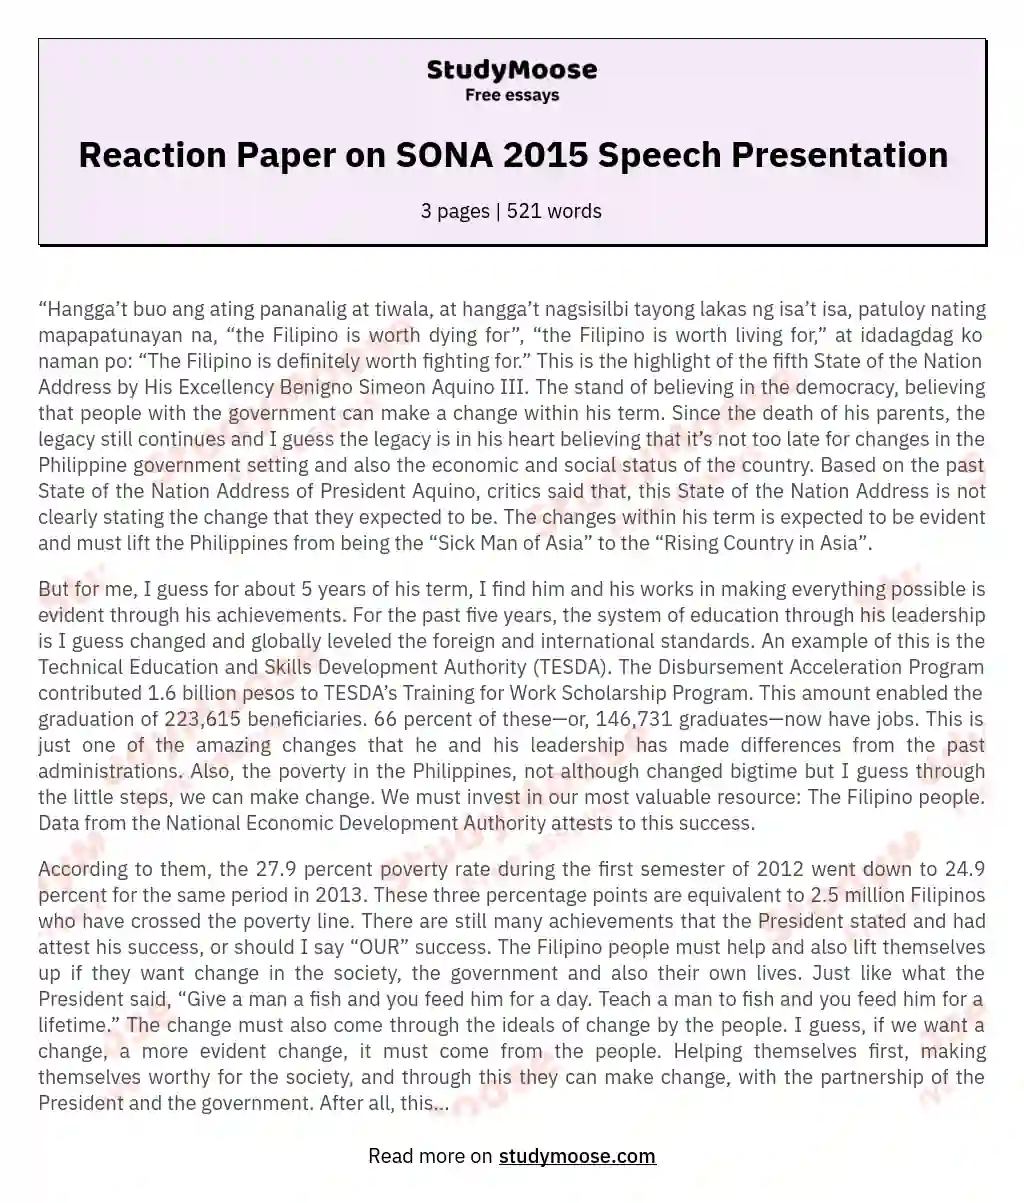 Reaction Paper on SONA 2015 Speech Presentation